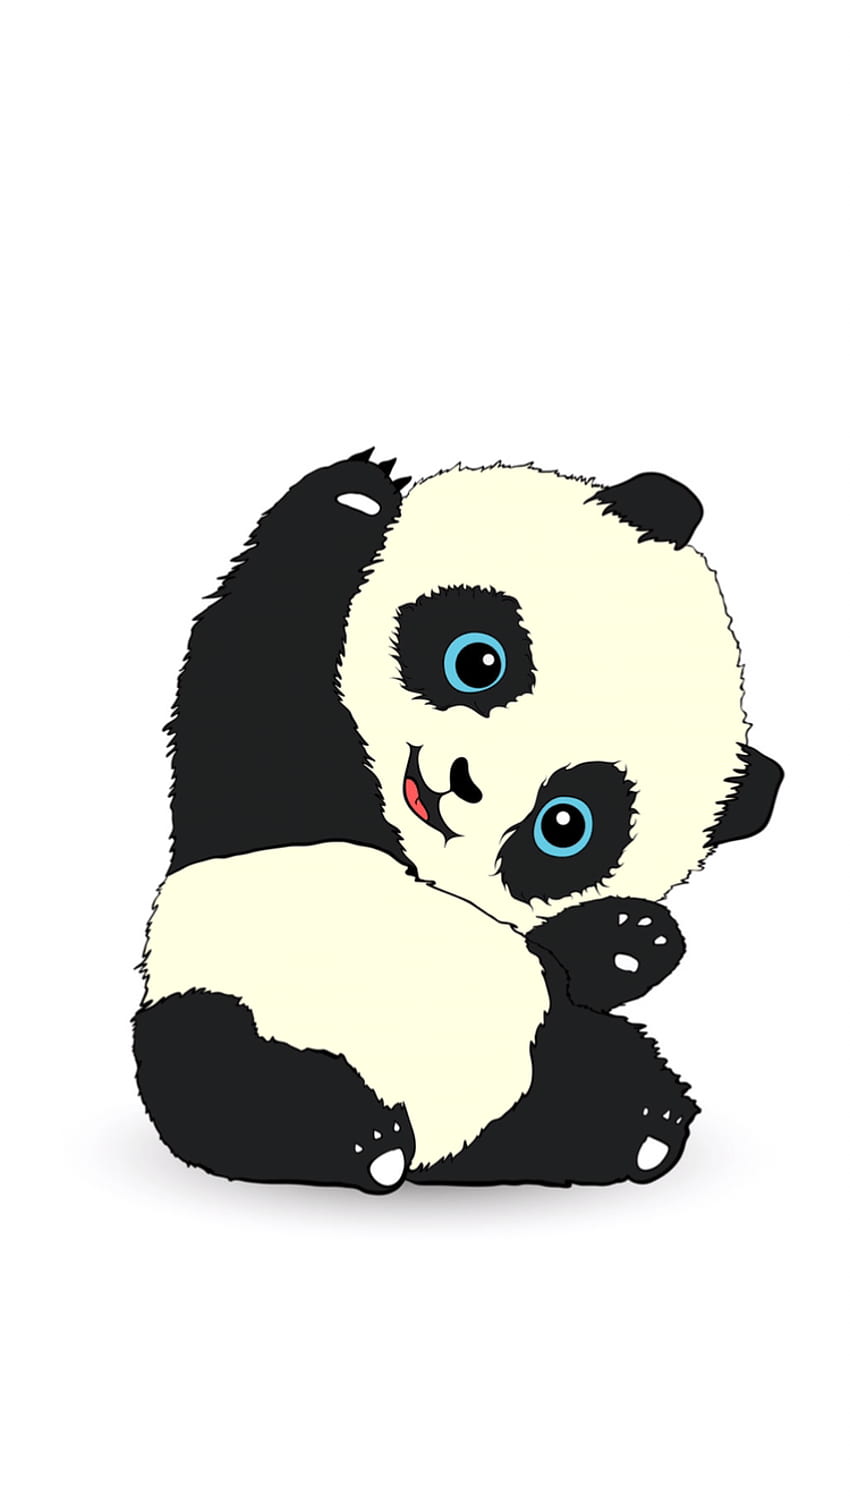 Cute Panda Drawing by NeonZoey on DeviantArt-saigonsouth.com.vn